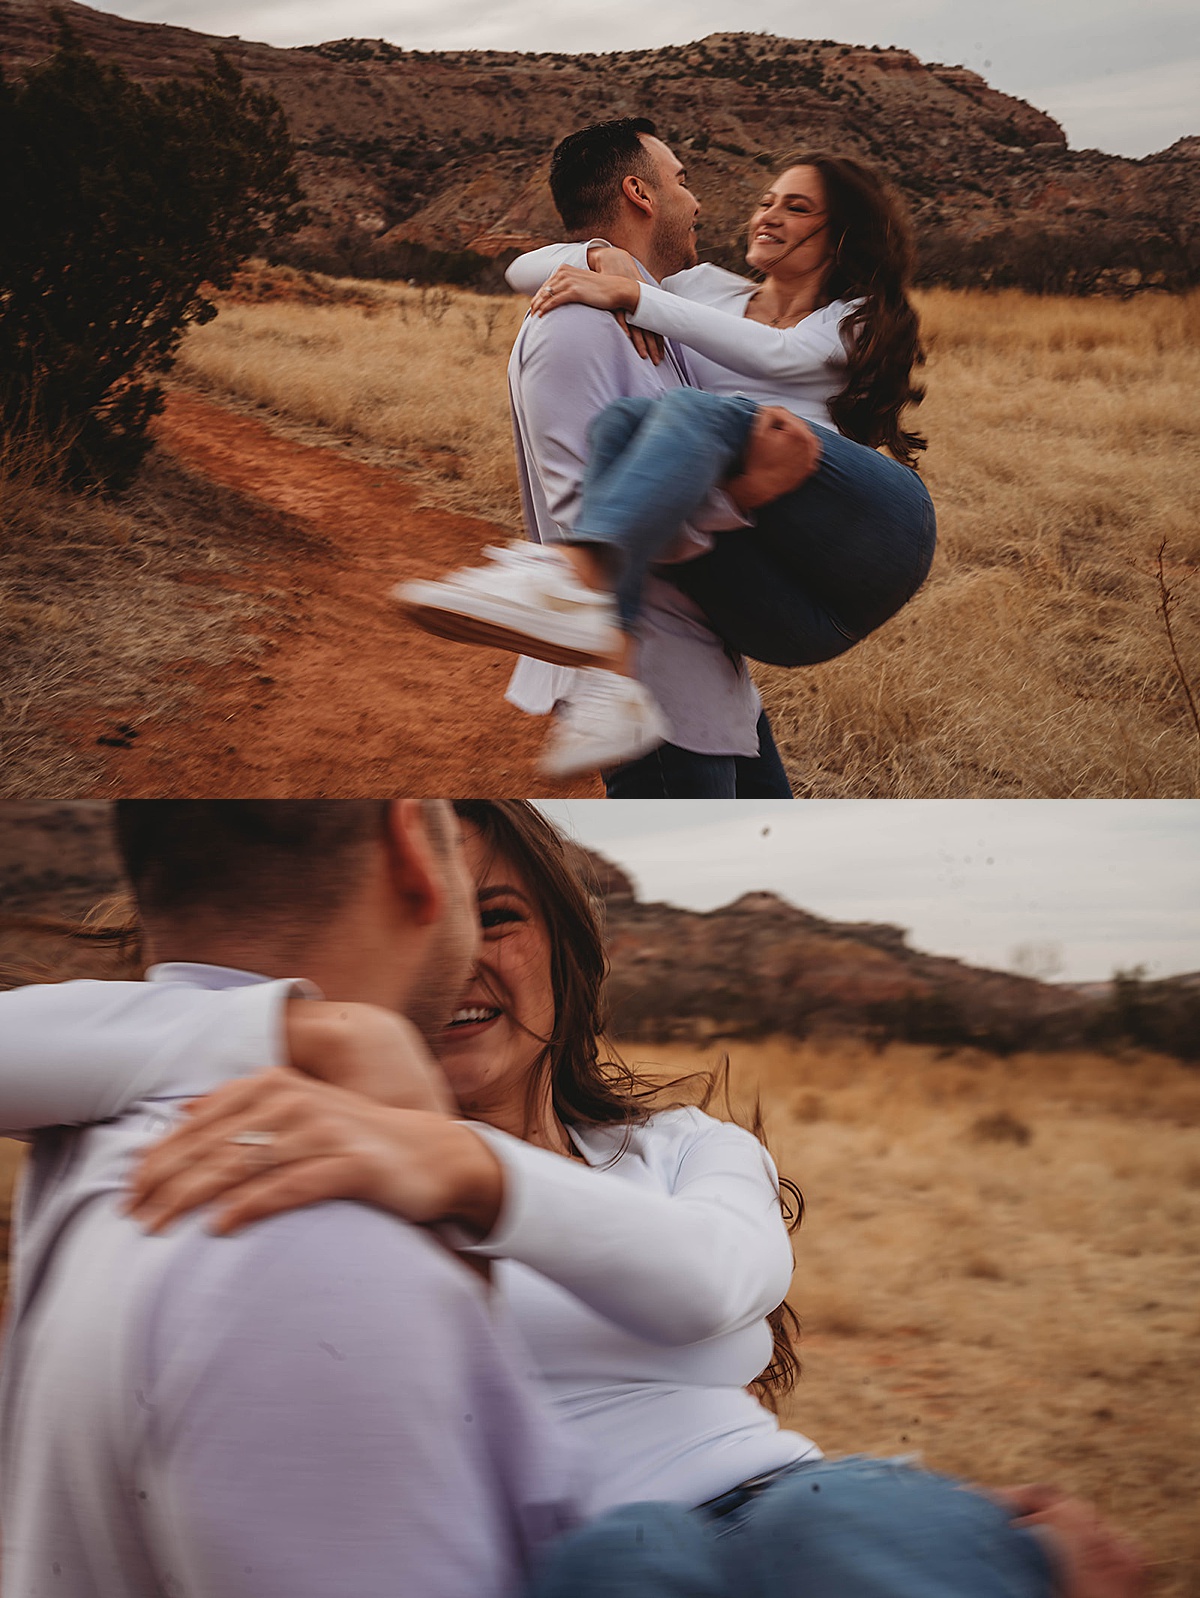 man sweeps his fiancee off her feet in joyful canyon adventure engagement shoot